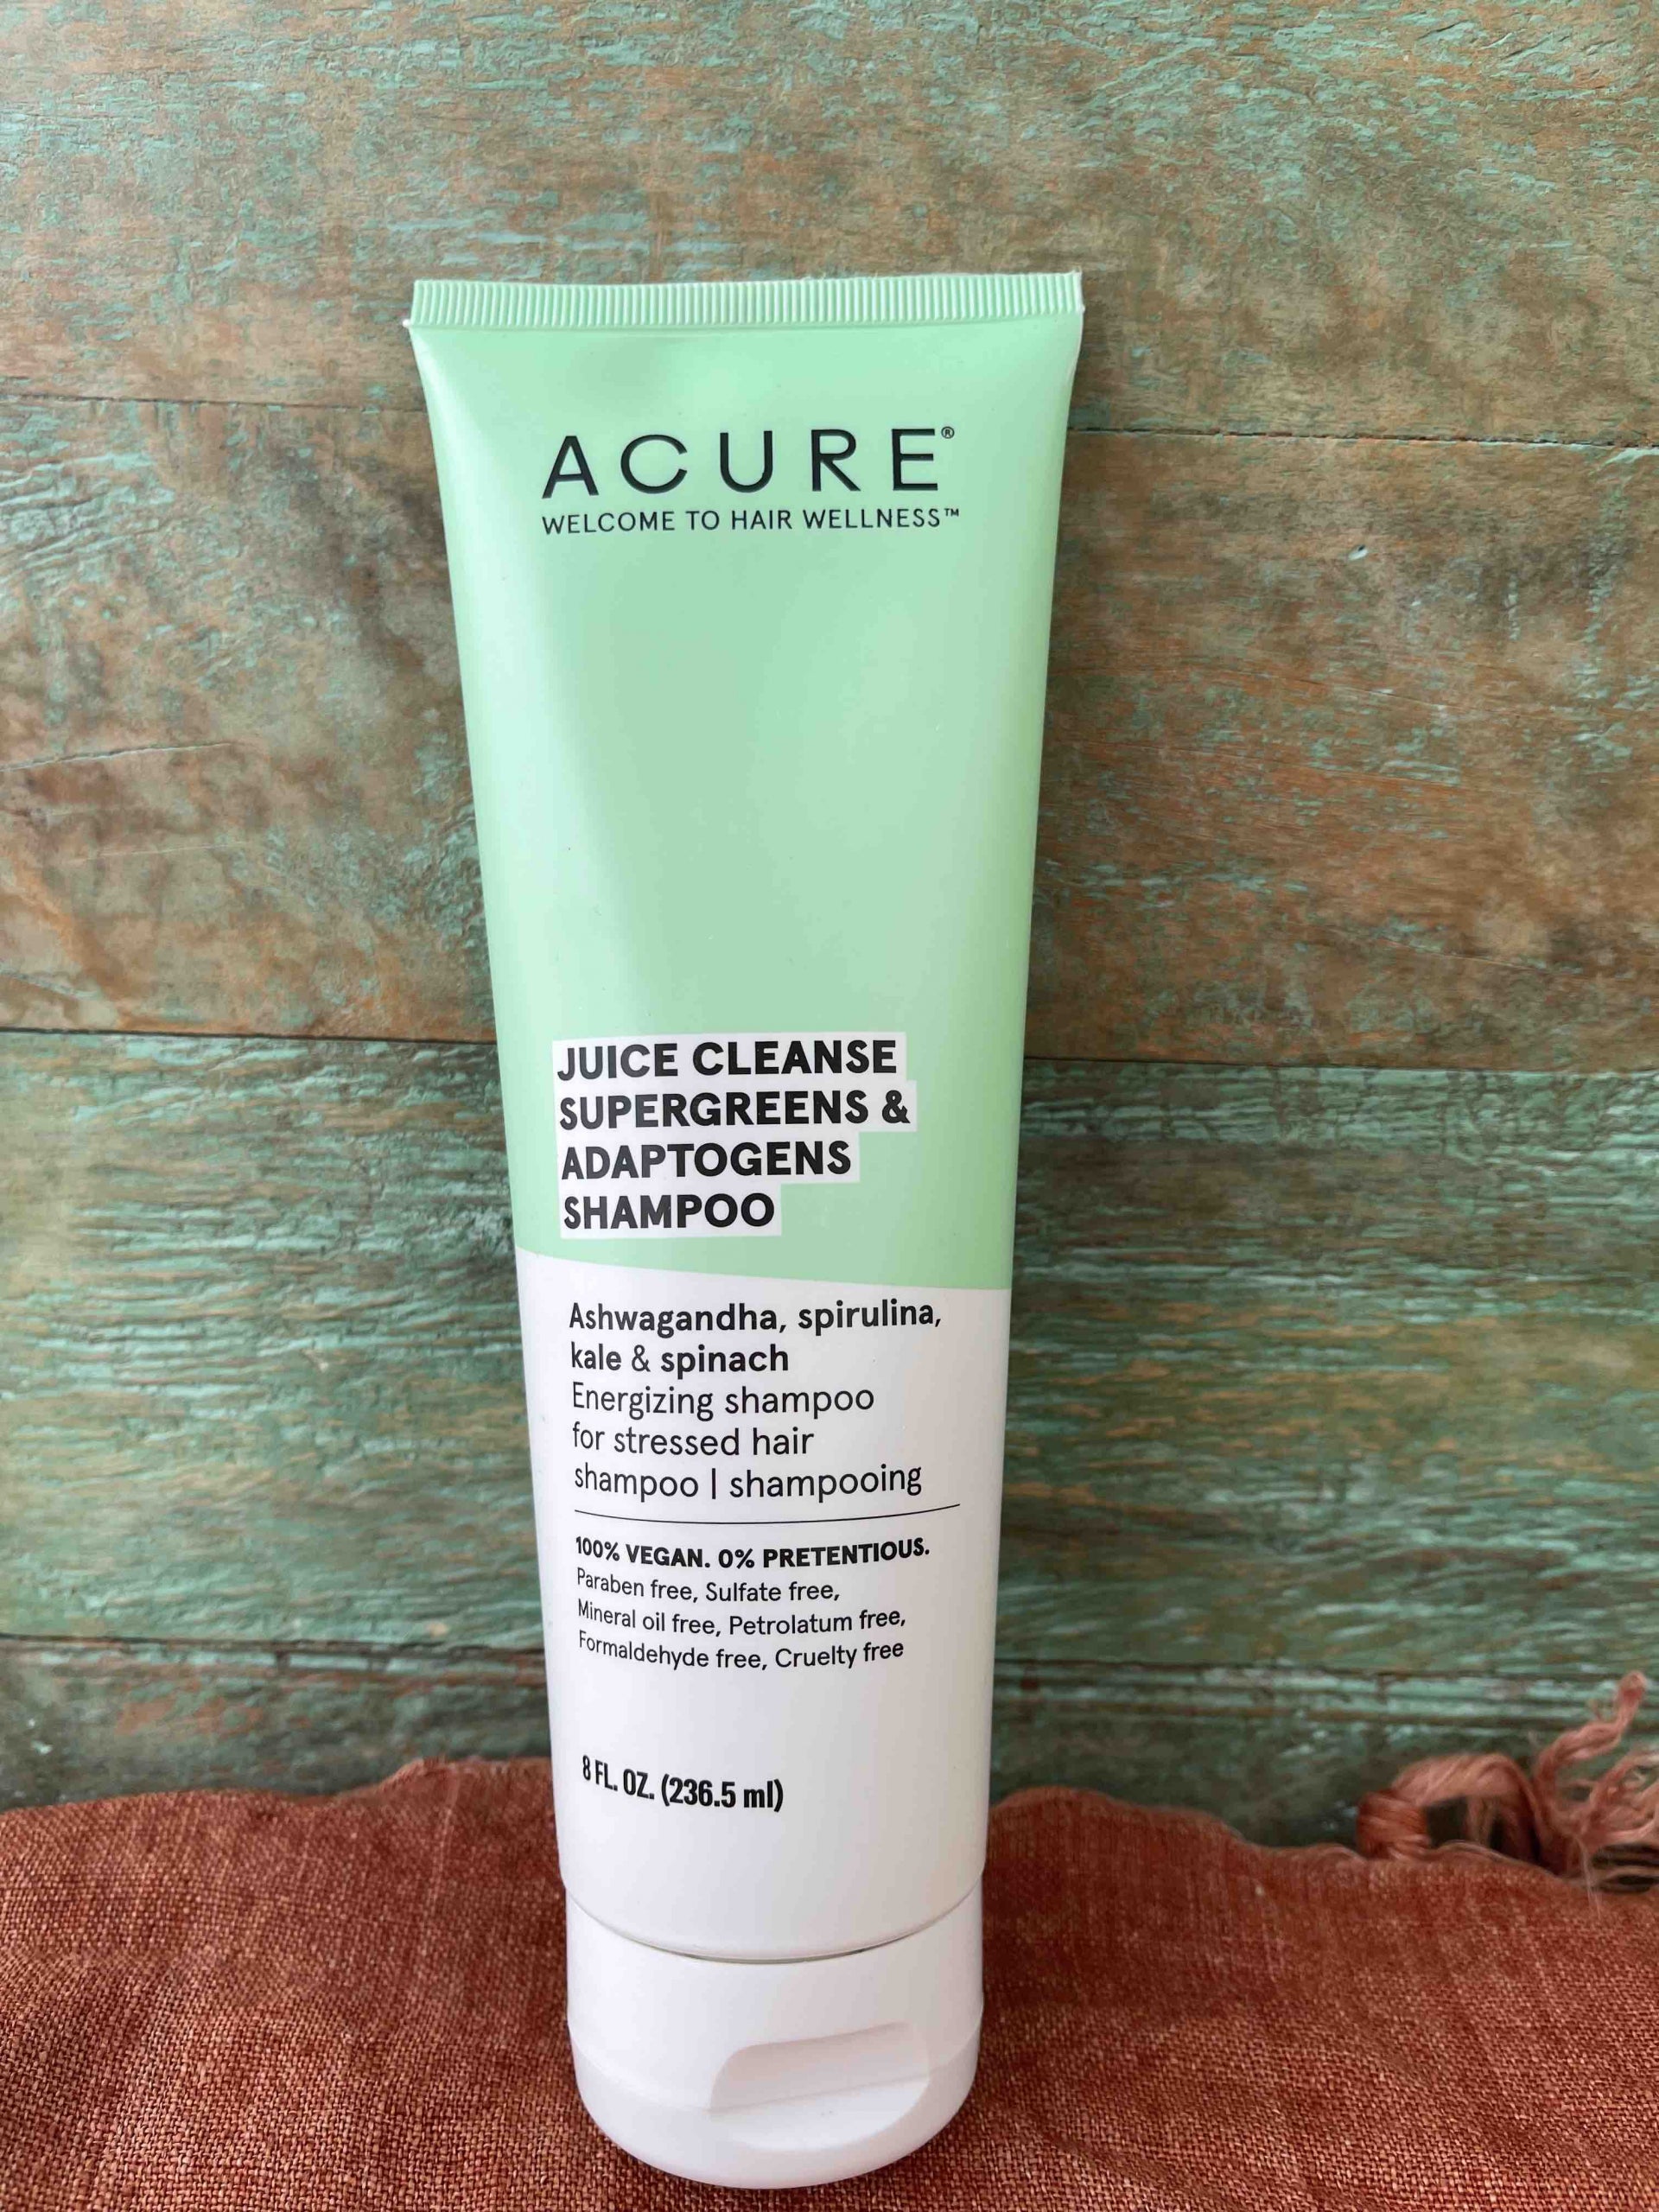 Acure Juice Cleanse Supergreens & Adaptogens Shampoo